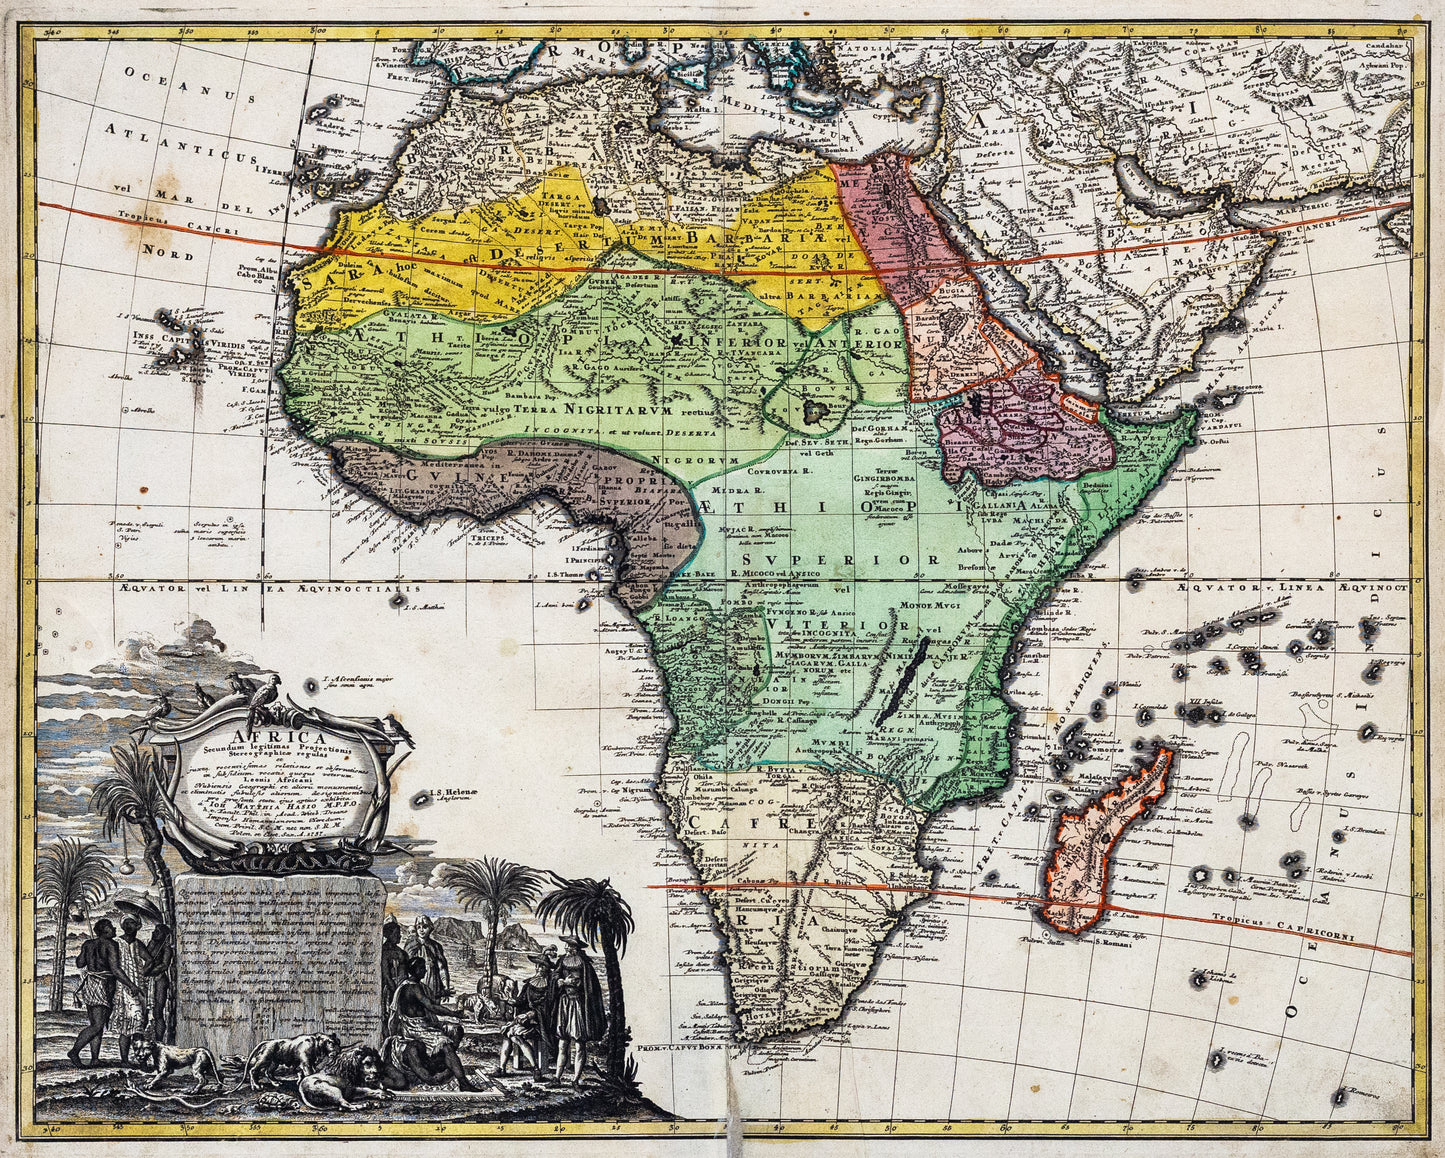 Heirs, Homann. Africa Secundum legitimas Projectionis Stereographicae regulas. Nuremberg: 1740